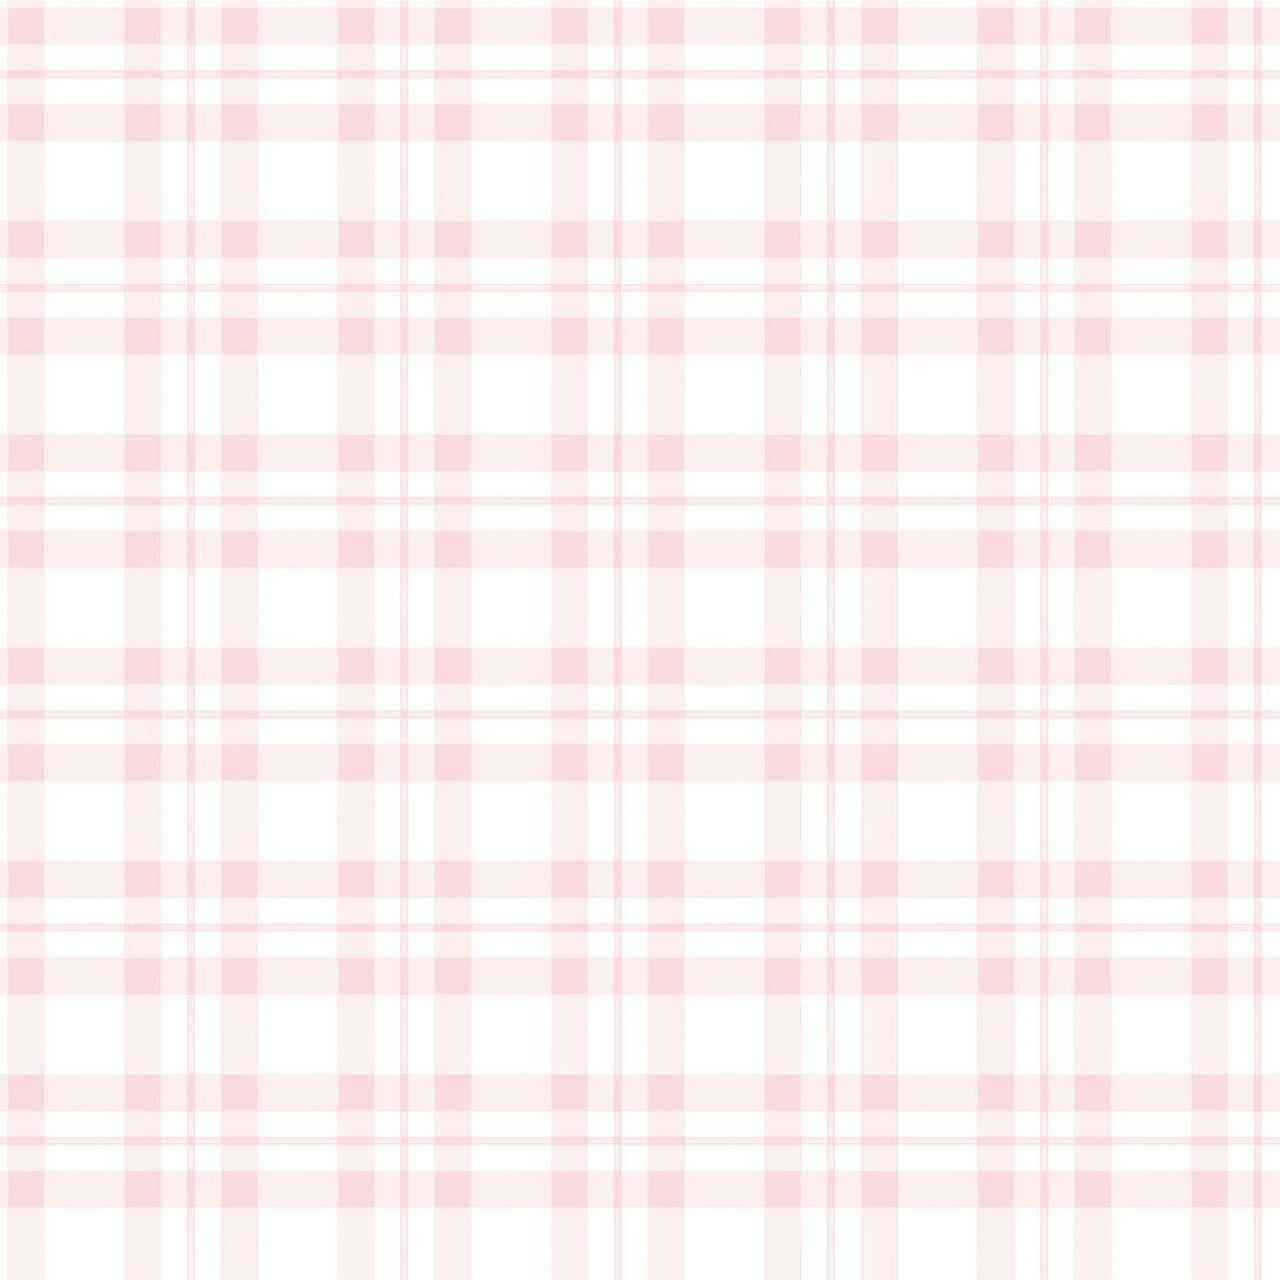 A baby pink wallpaper with a tartan design - Checkered